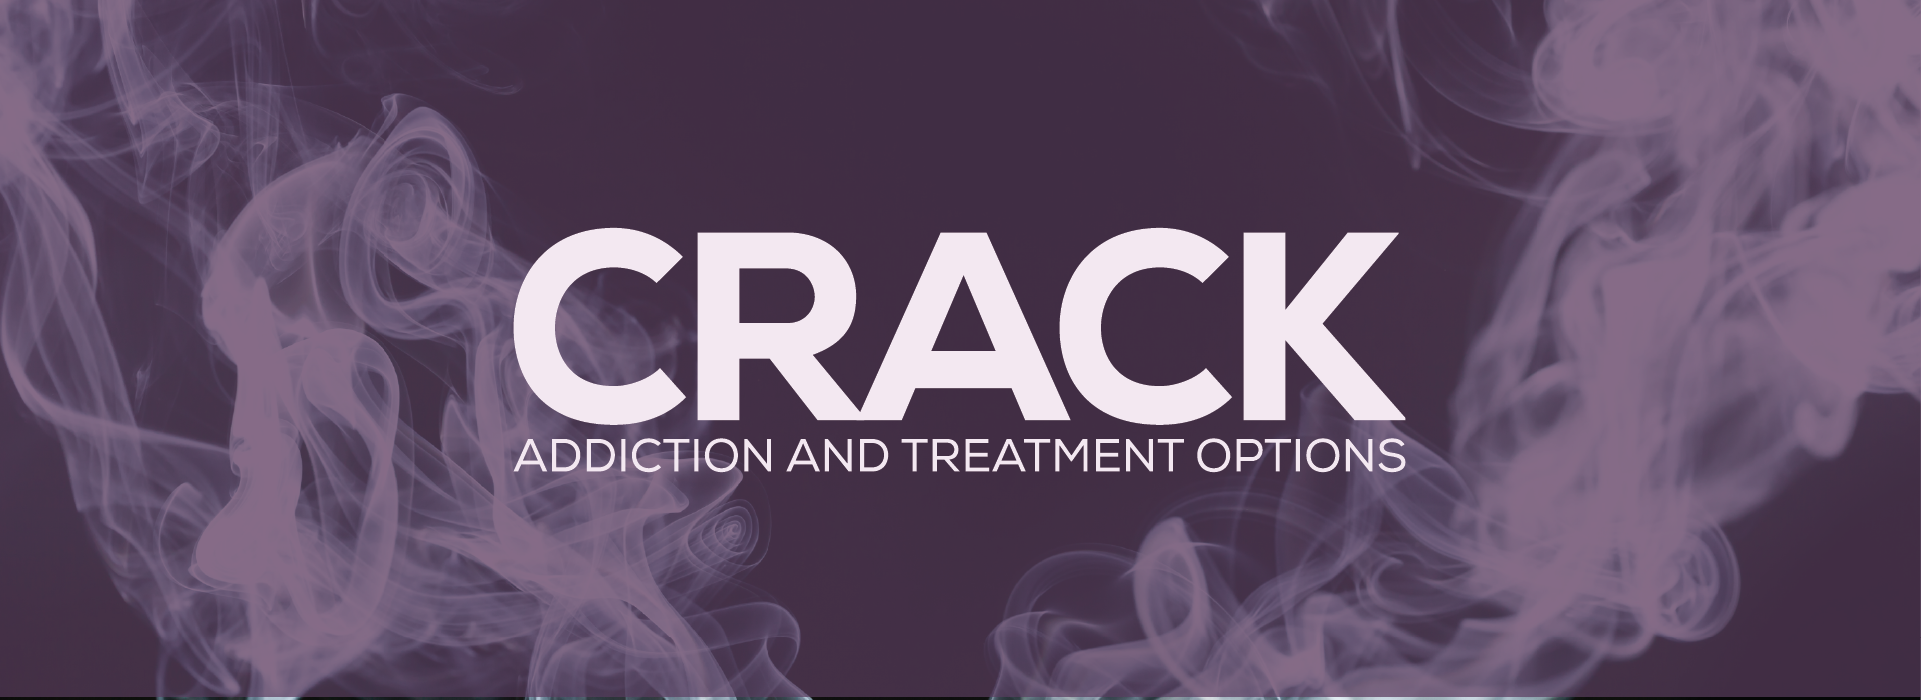 Crack Addiction And Treatment Options 